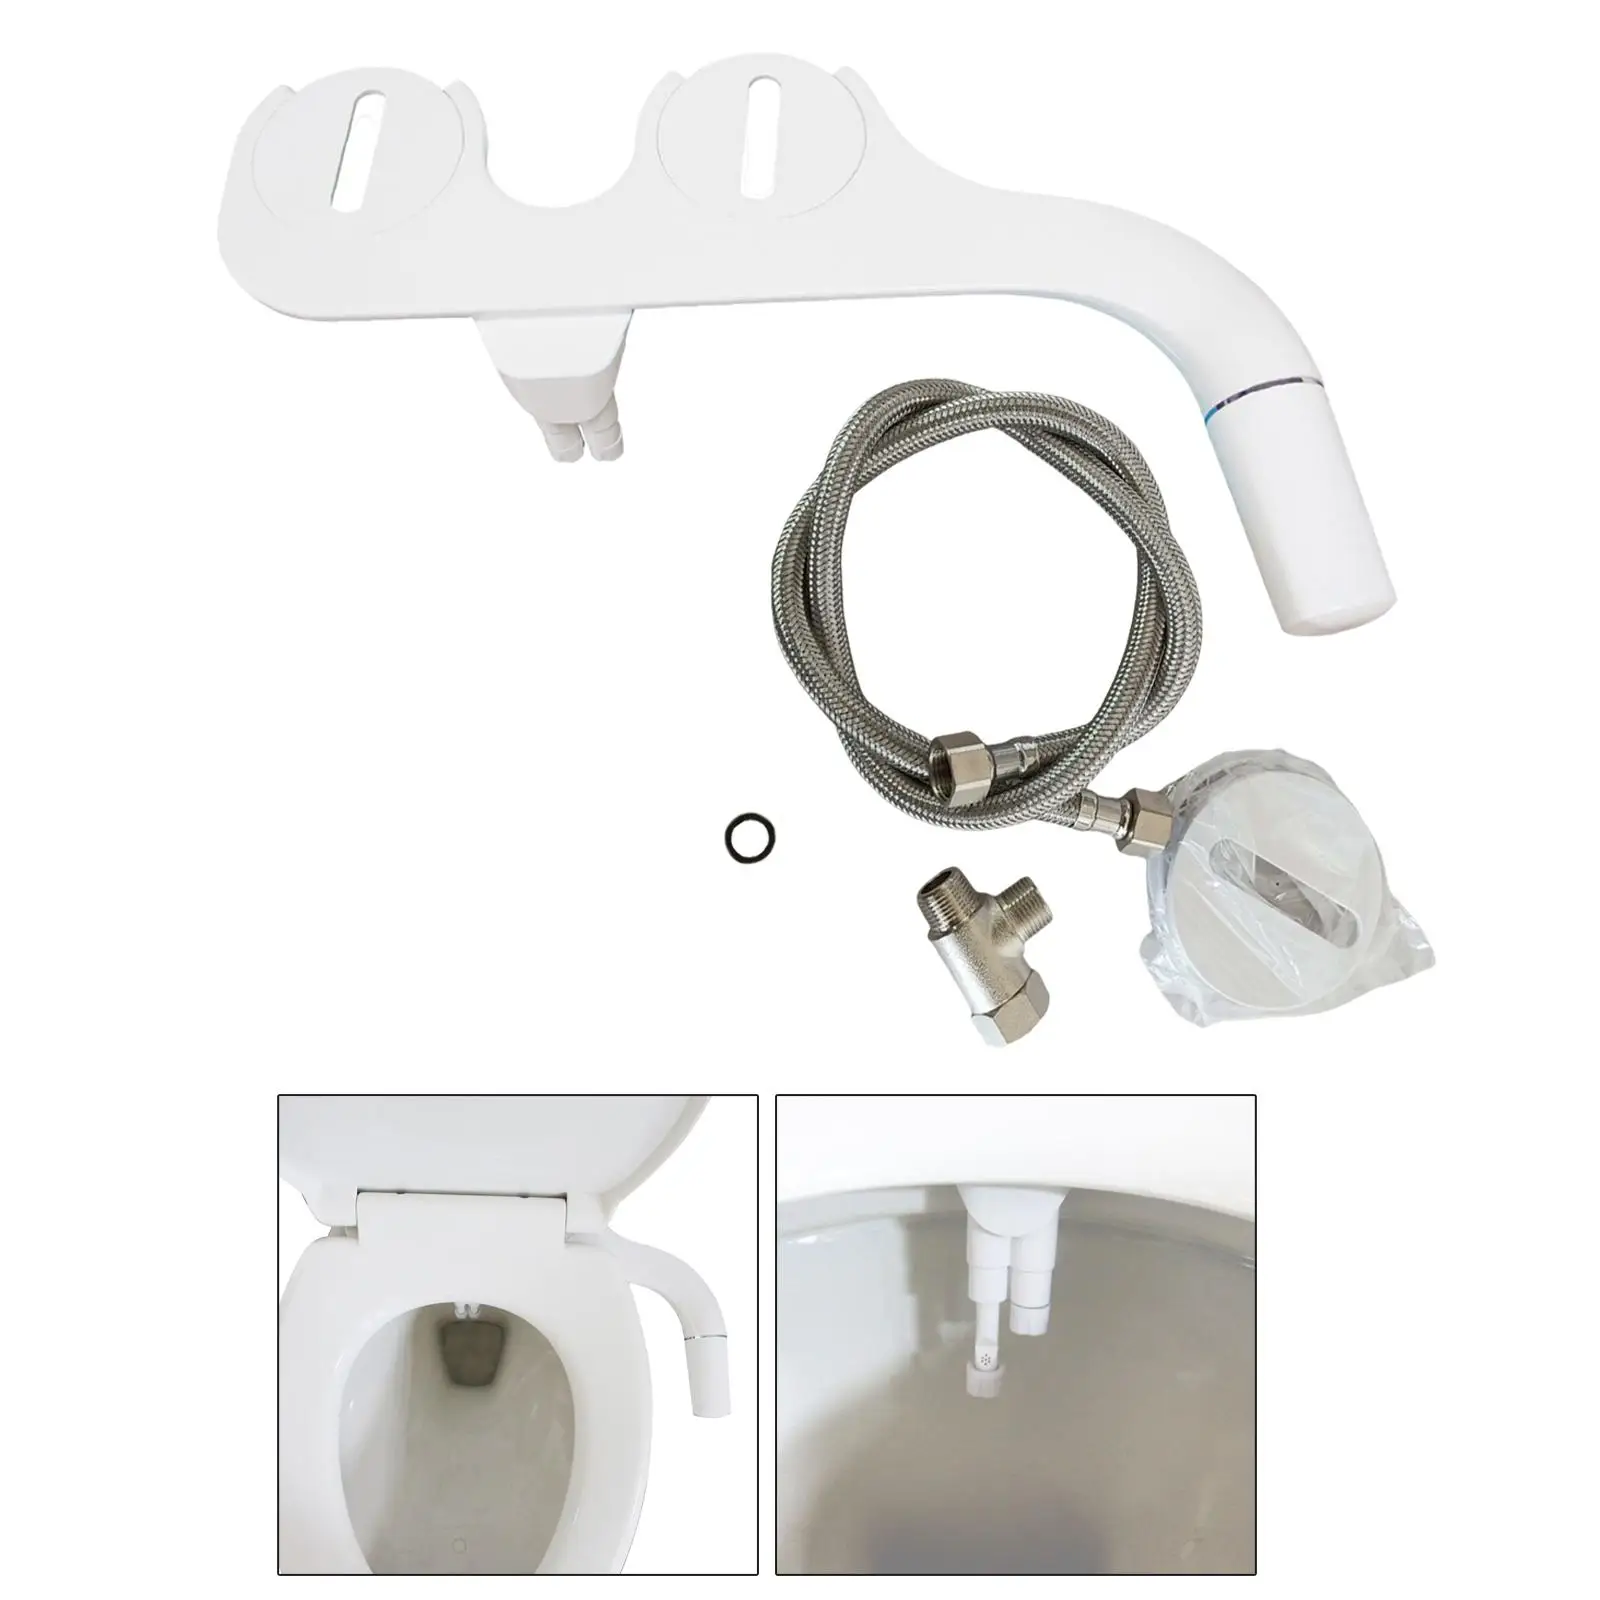 Bidet Toilet Seat Attachment Washer Water Sprayer Easy Install Self